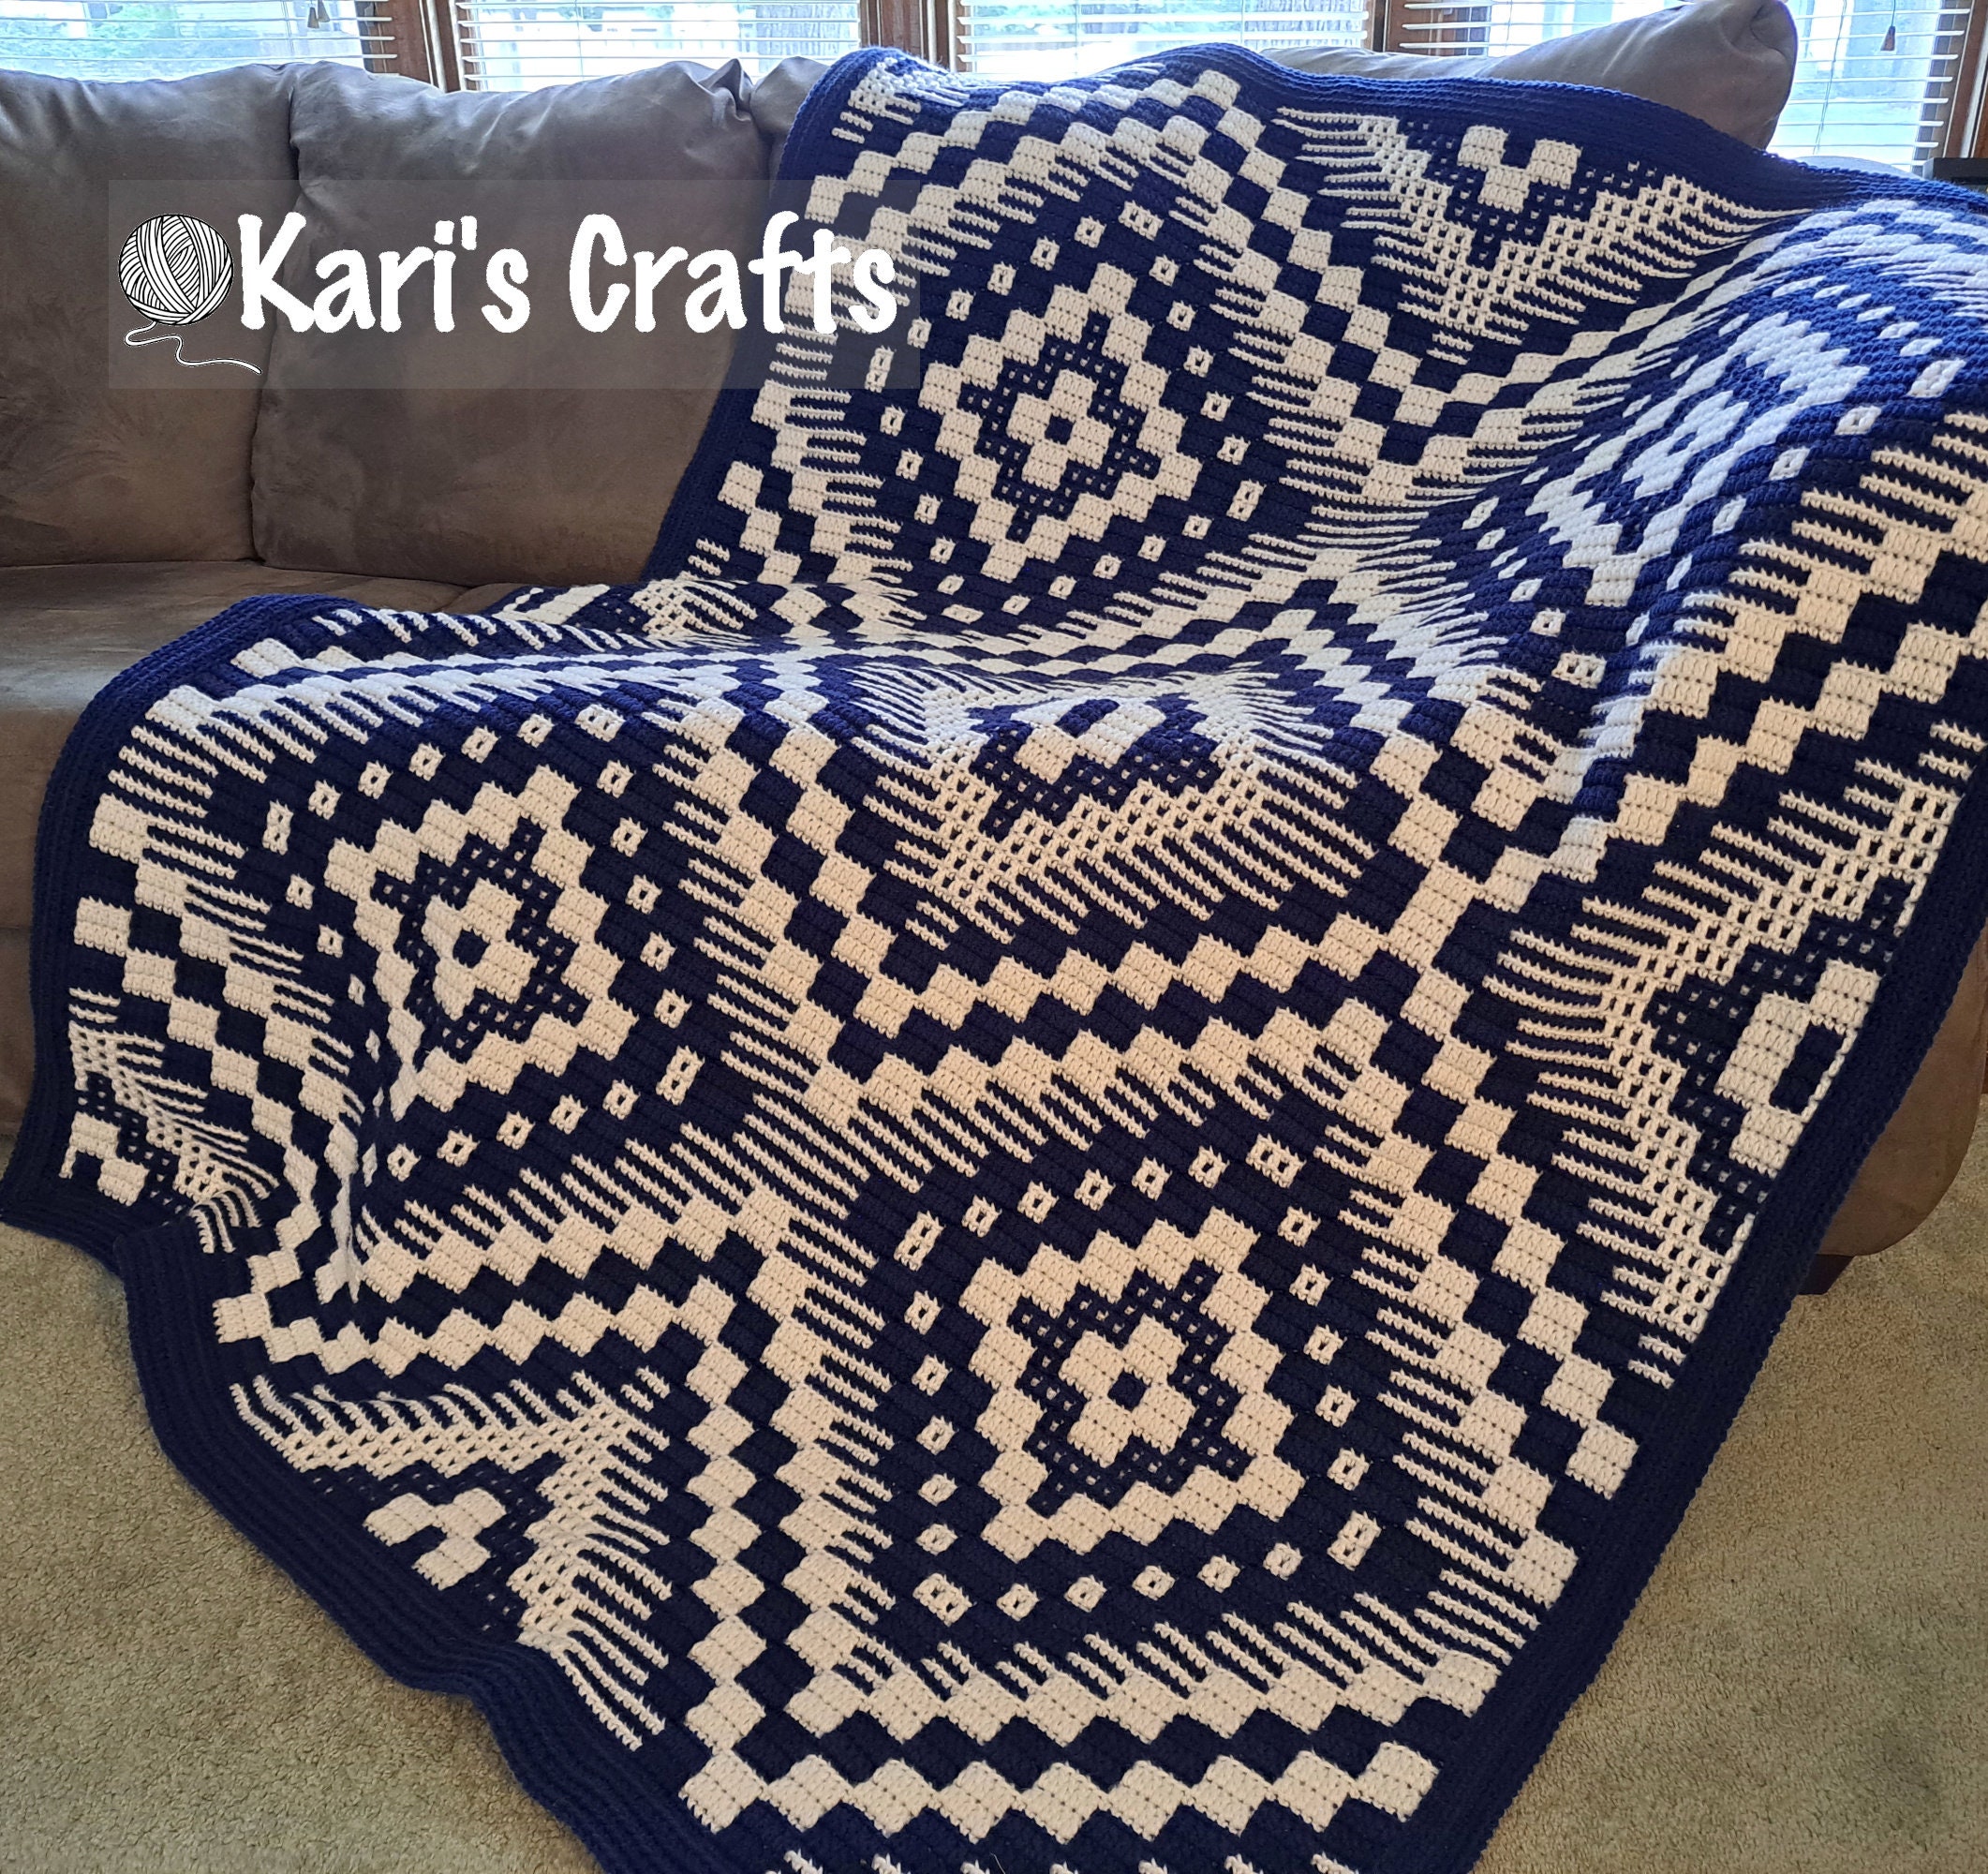 Magic Eye Throw Blanket Overlay Mosaic Crochet Pattern 